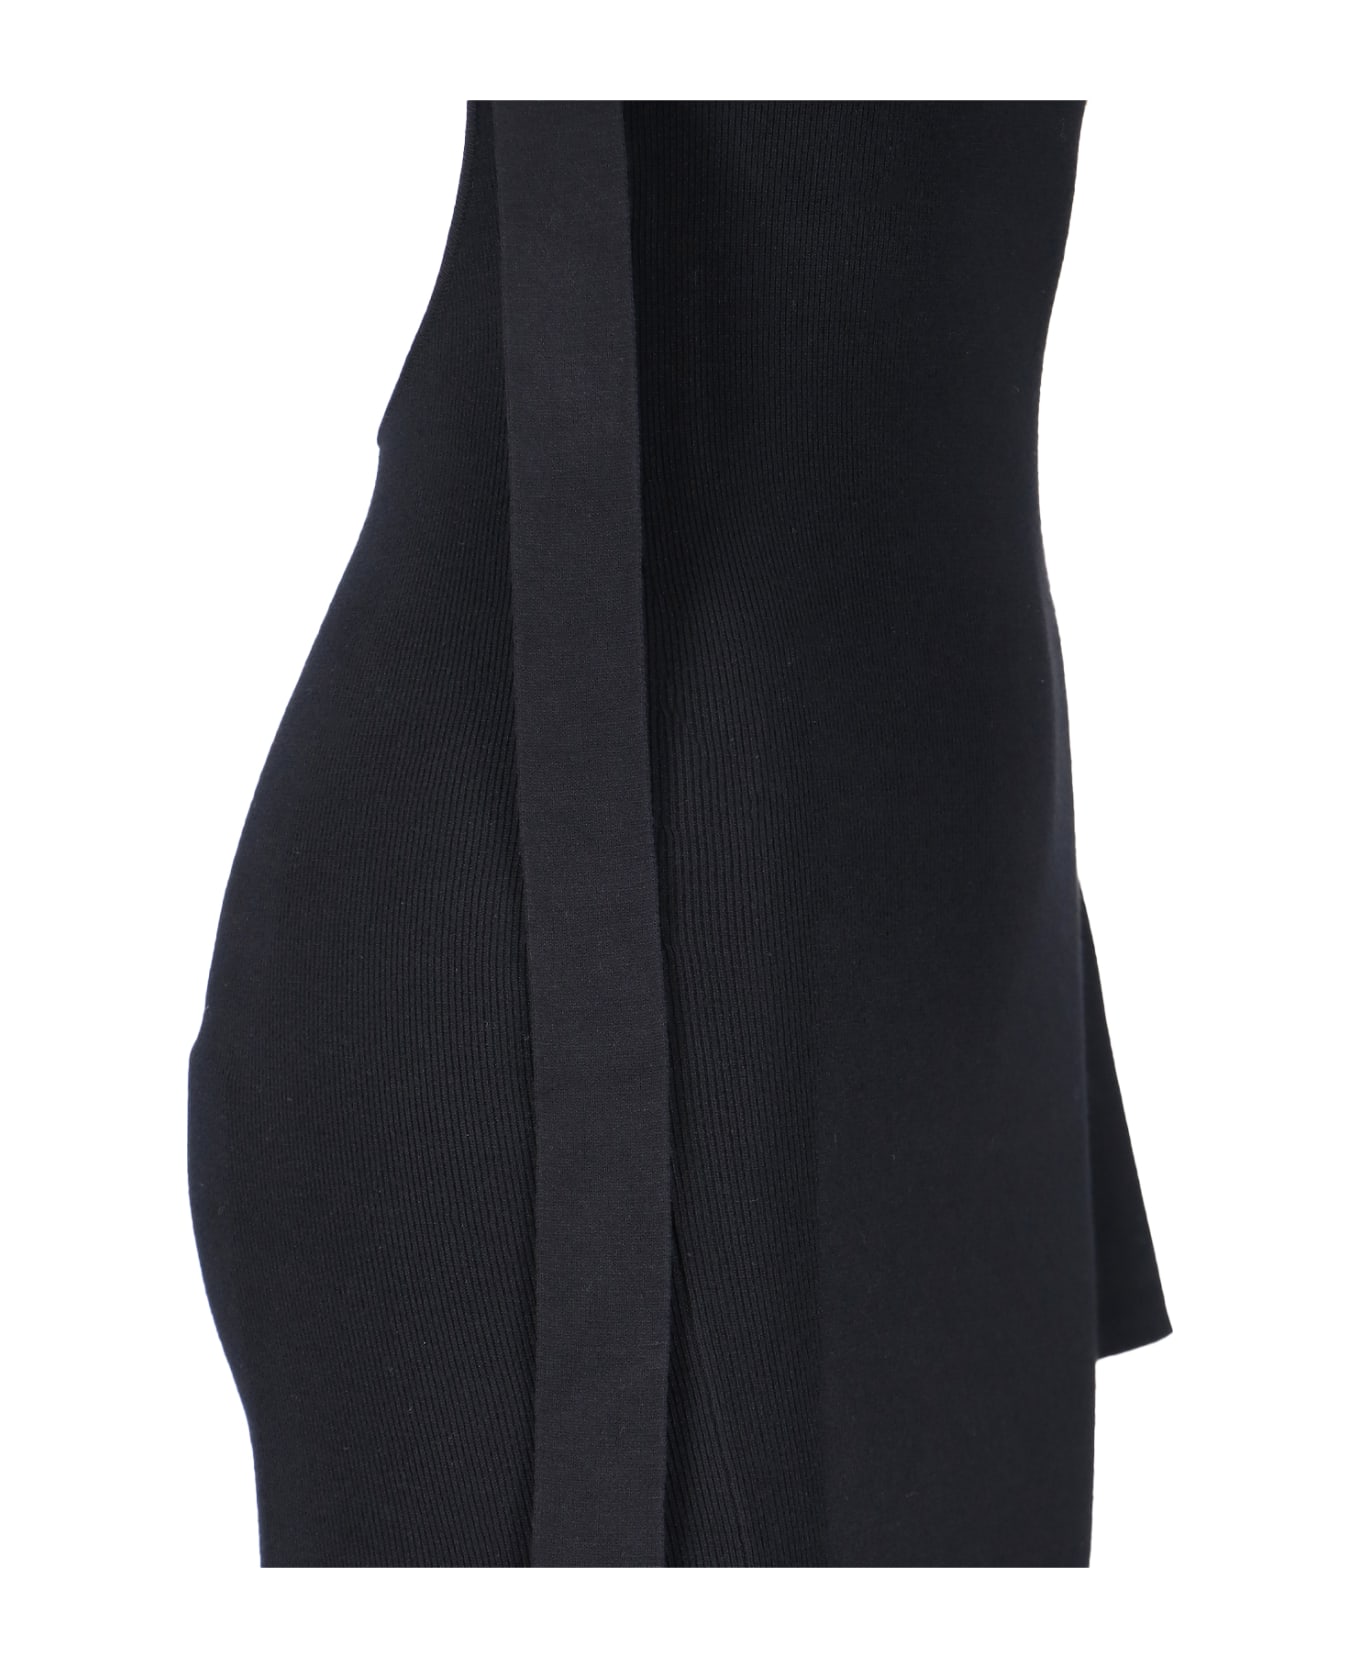 The Garment Dress - Black